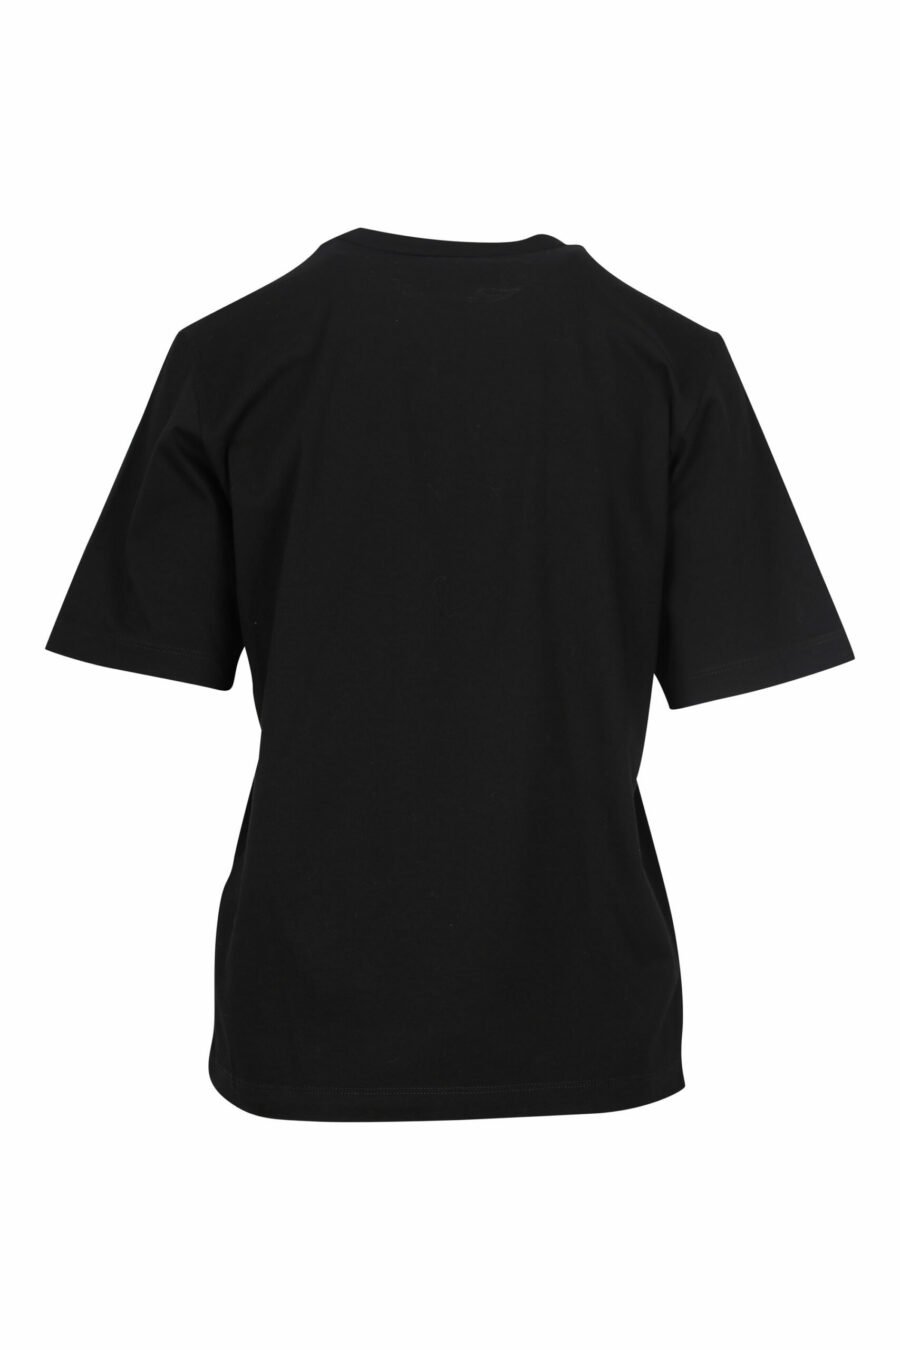 Black T-shirt with "icon pixeled" logo - 8054148006464 1 scaled